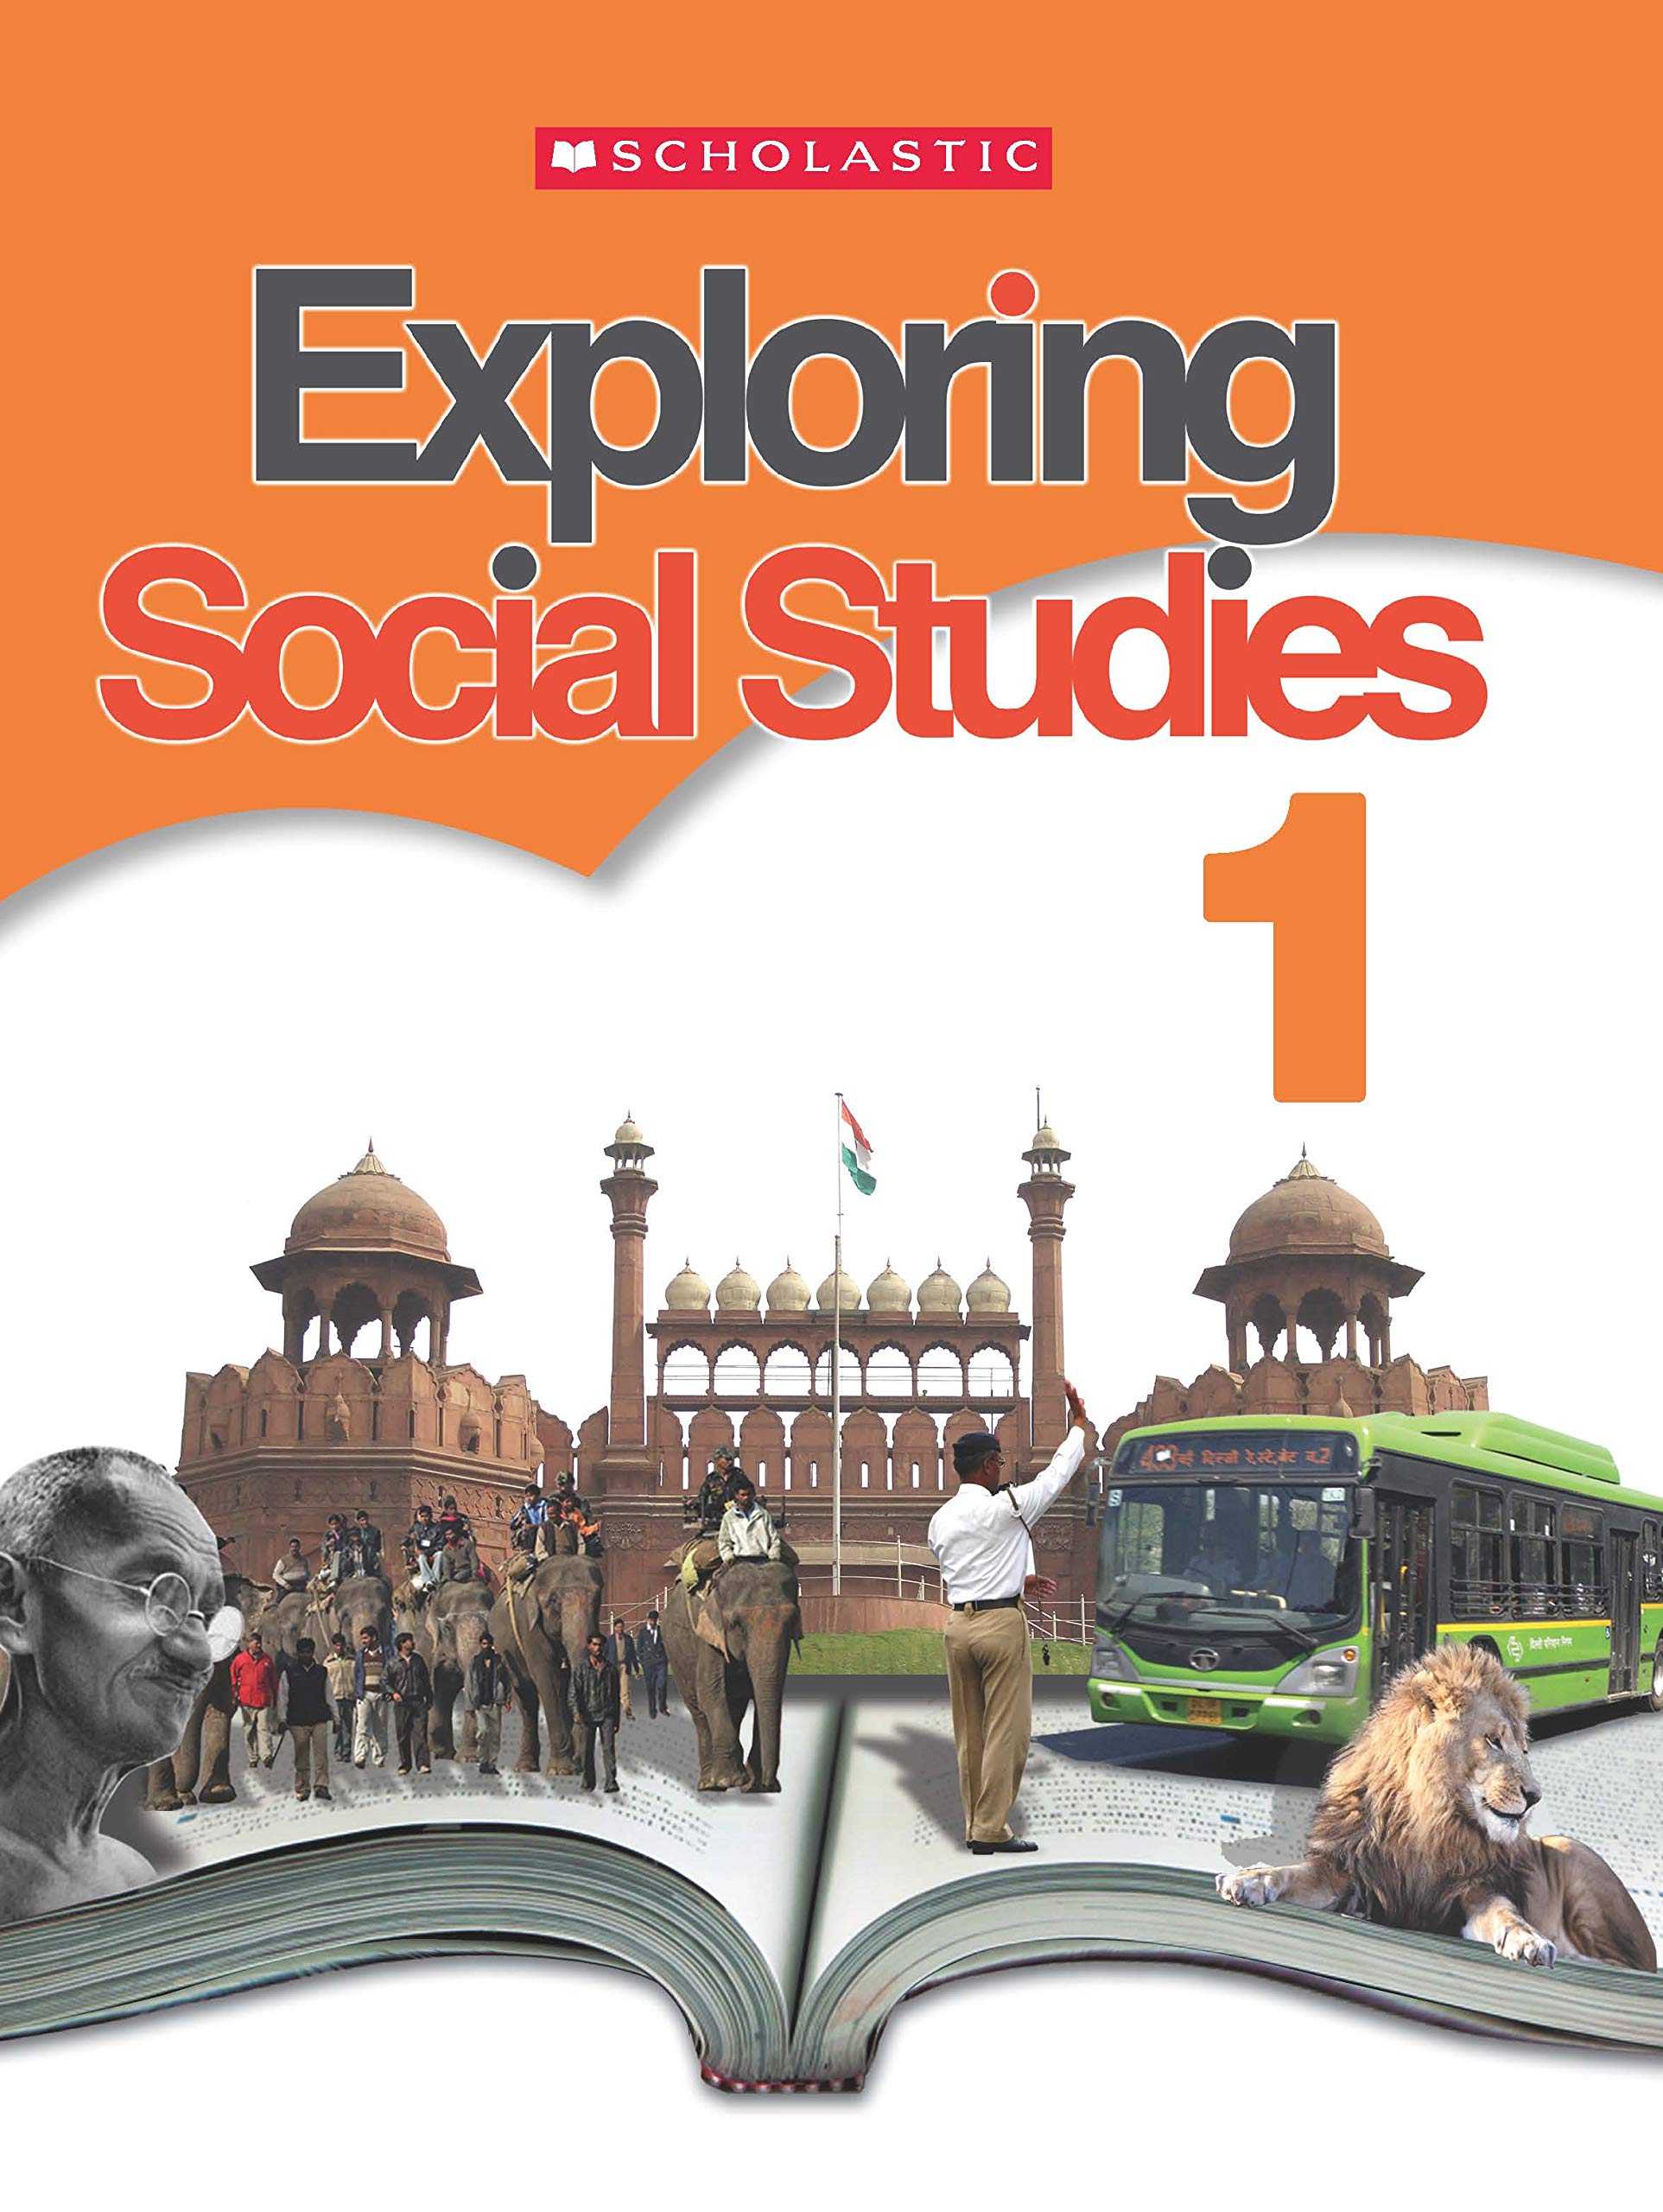 Scholastic Exploring Social Studies Course Book-1 